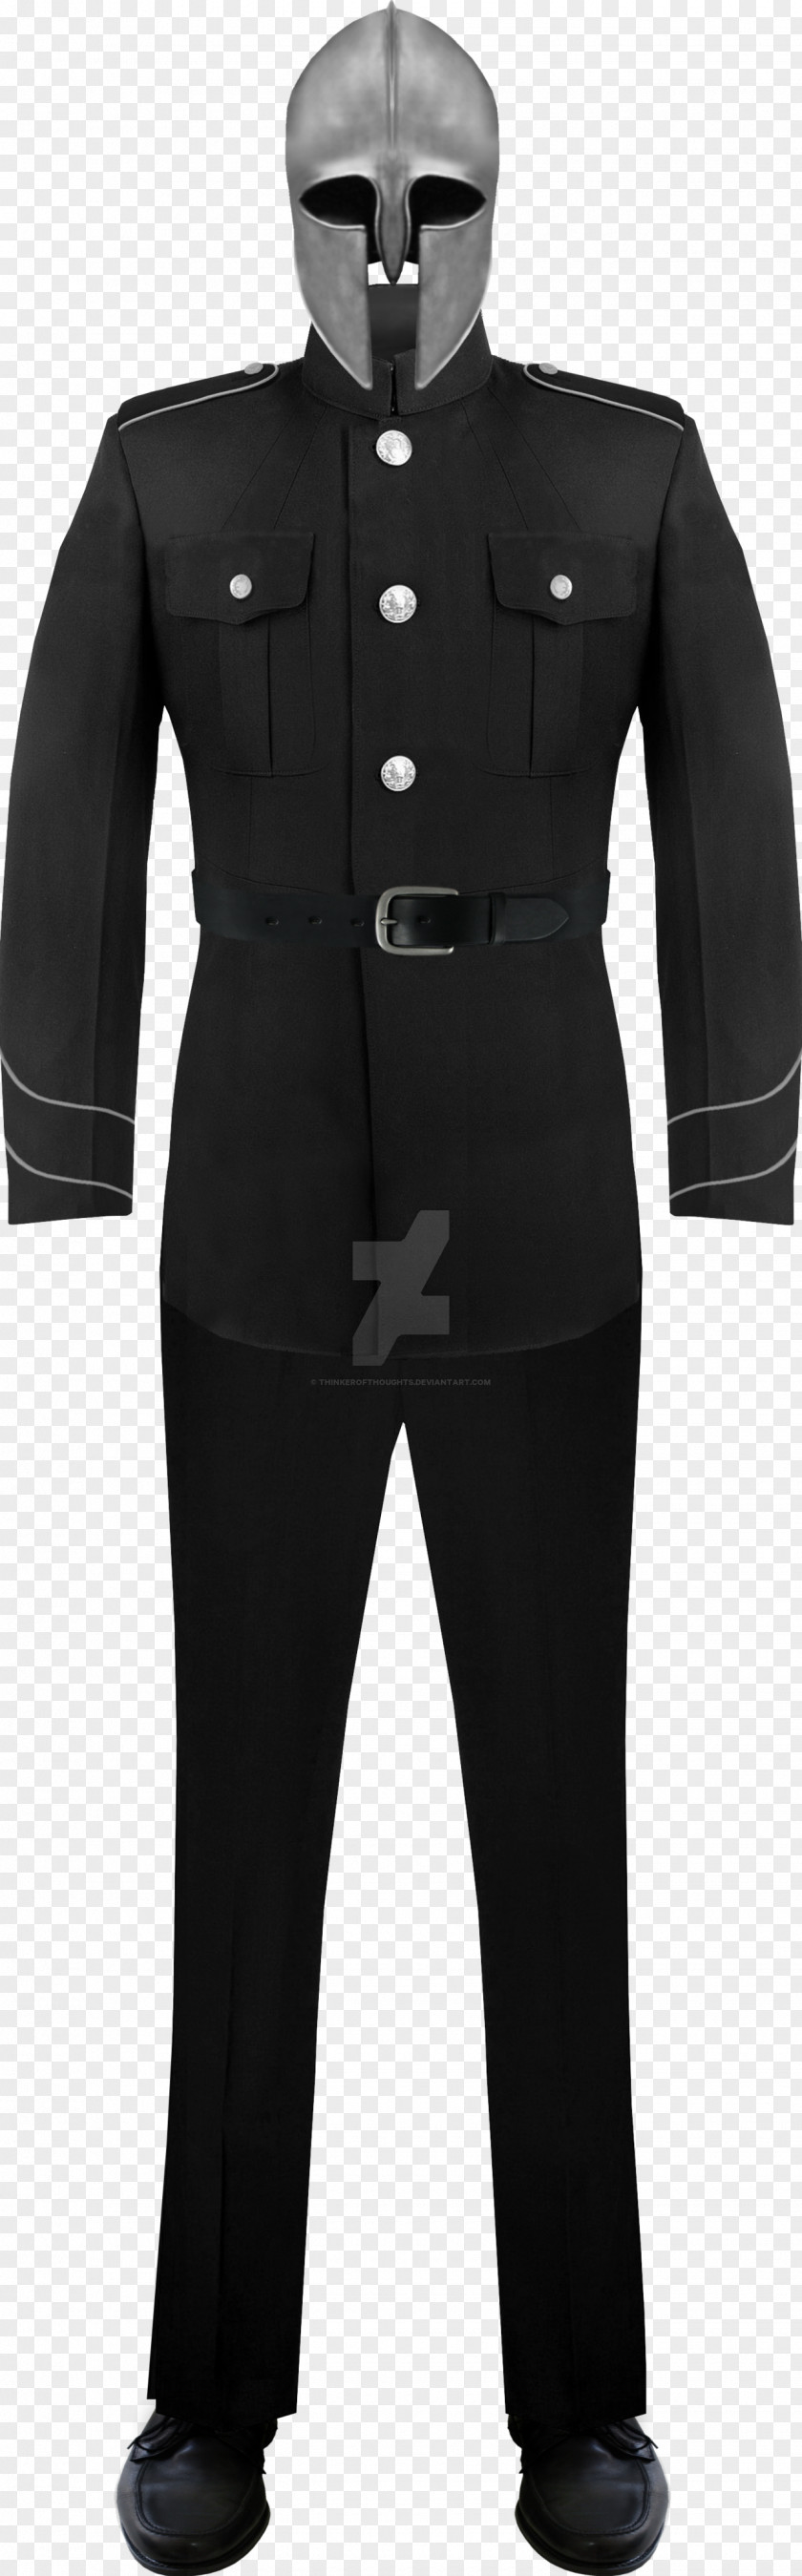 Formal Wear Backpack Uniform Satchel Amazon.com PNG